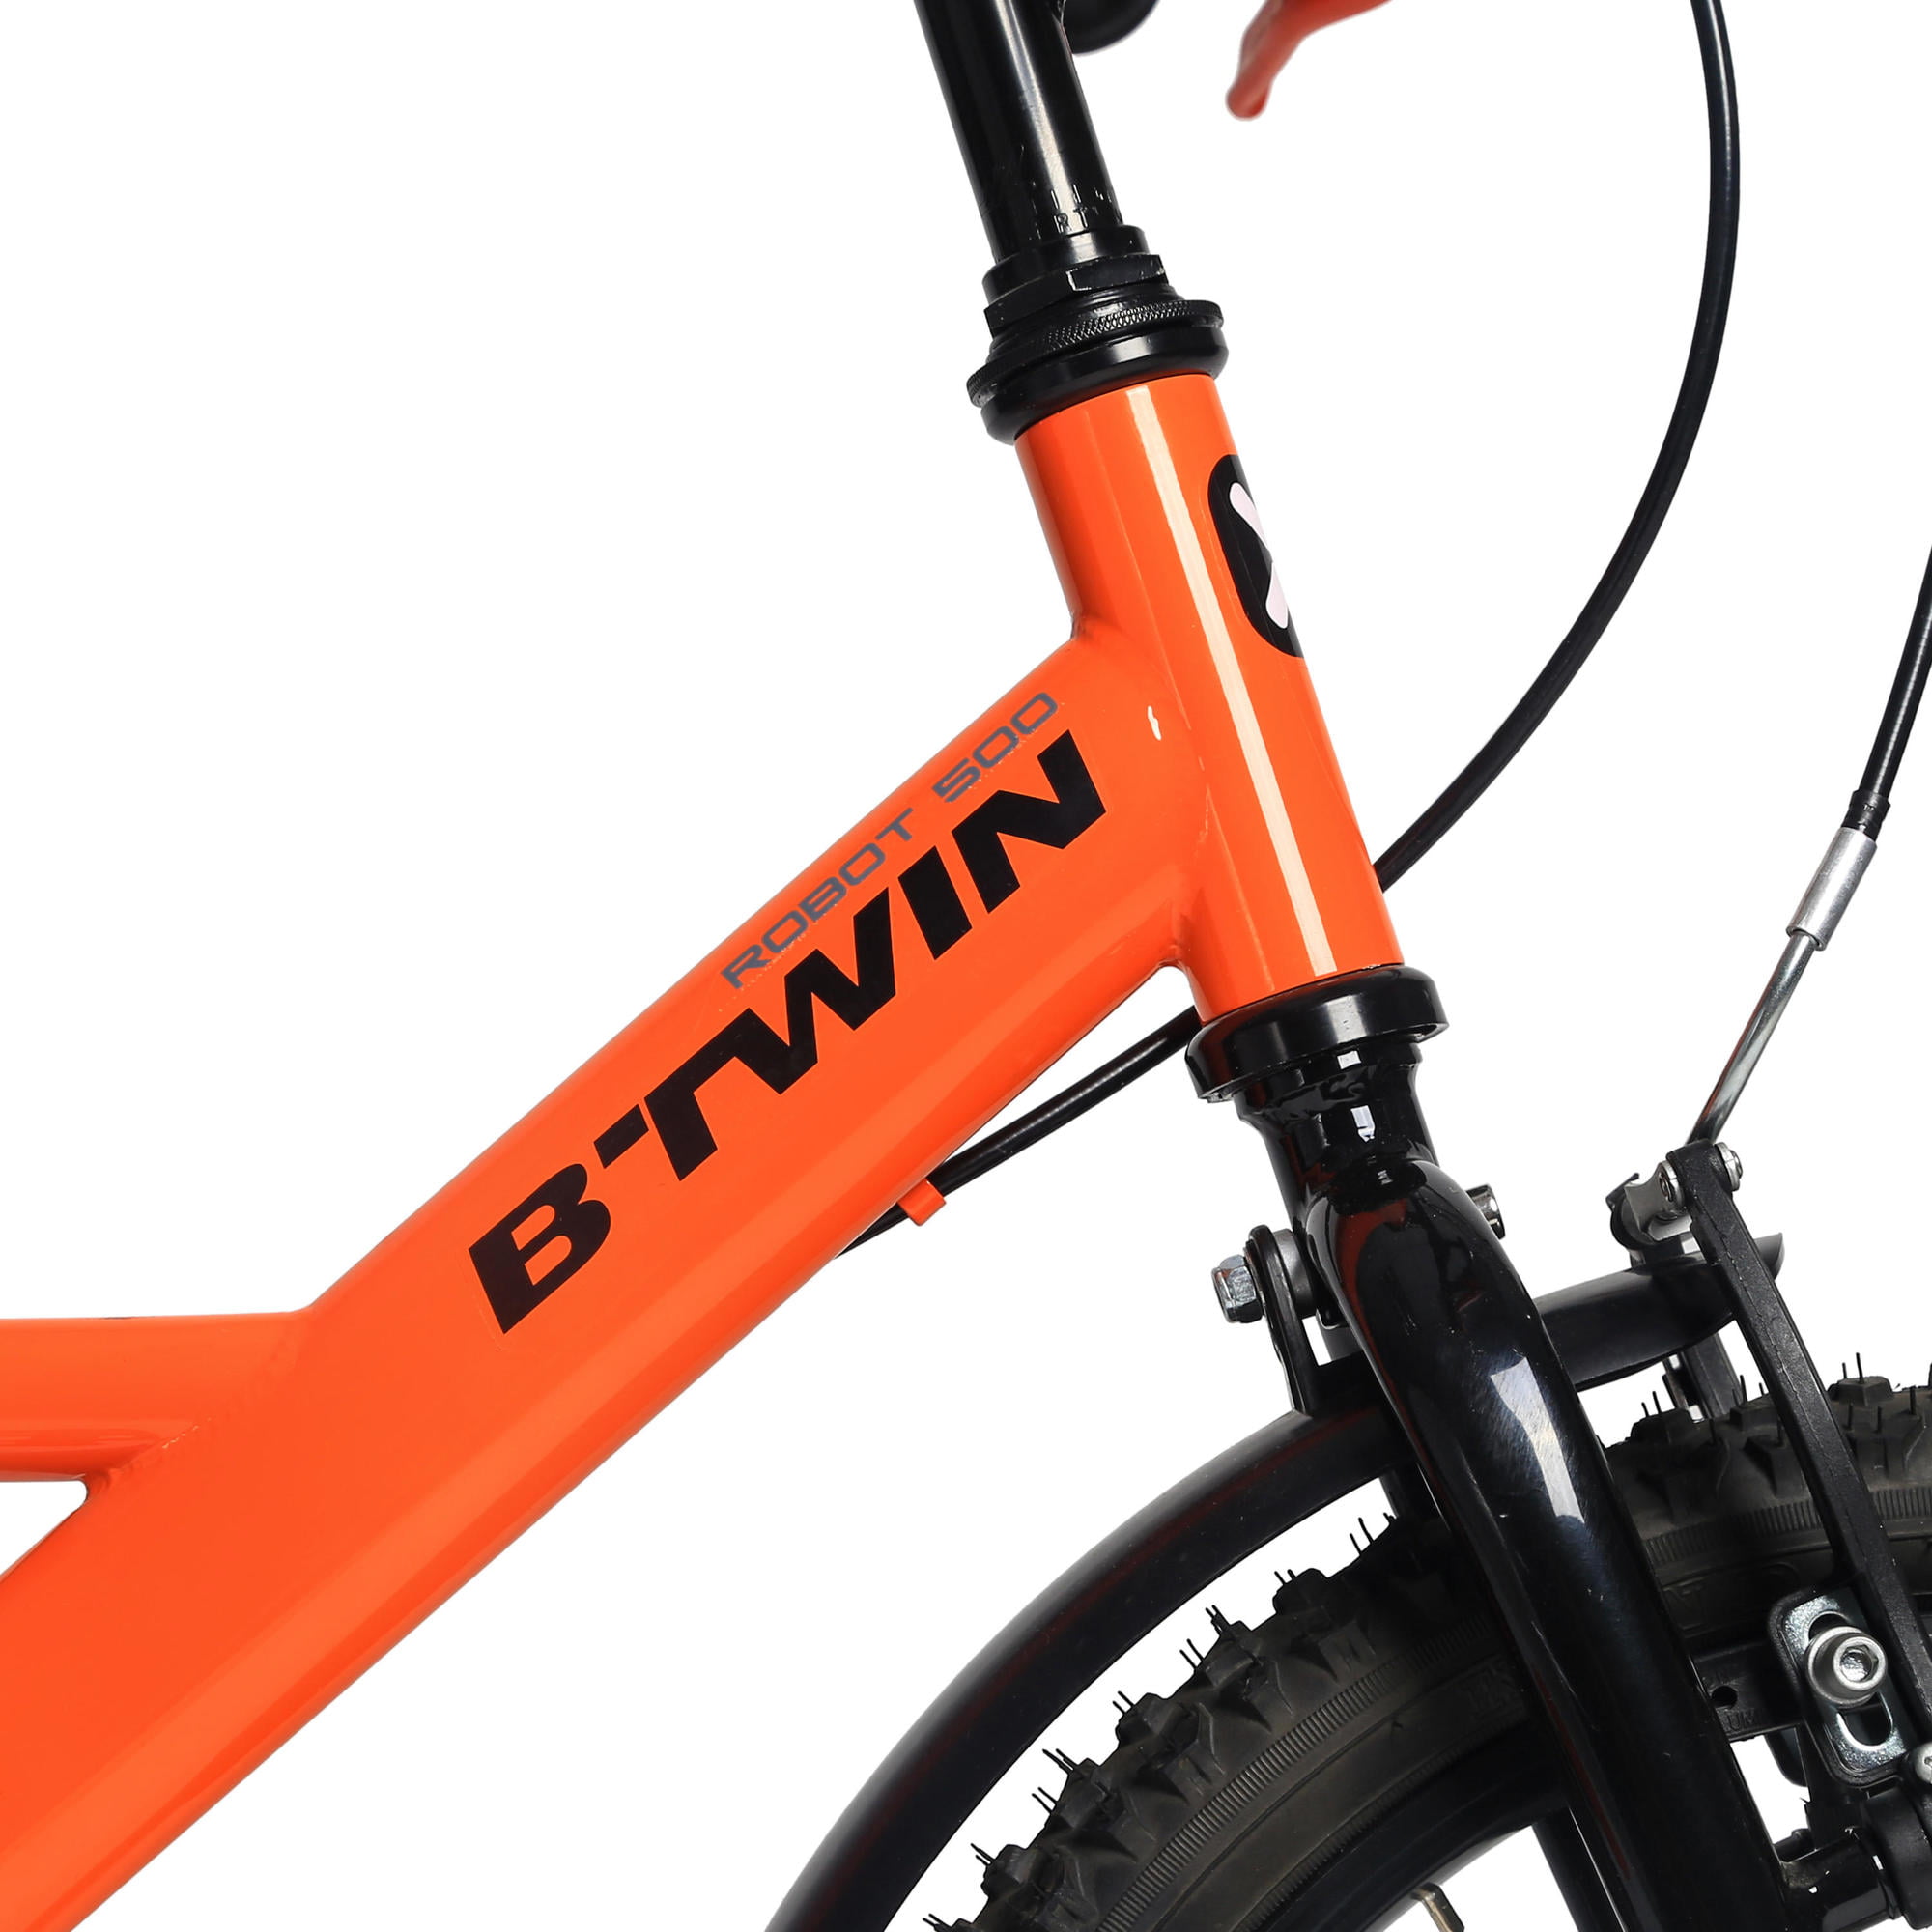 btwin orange bike